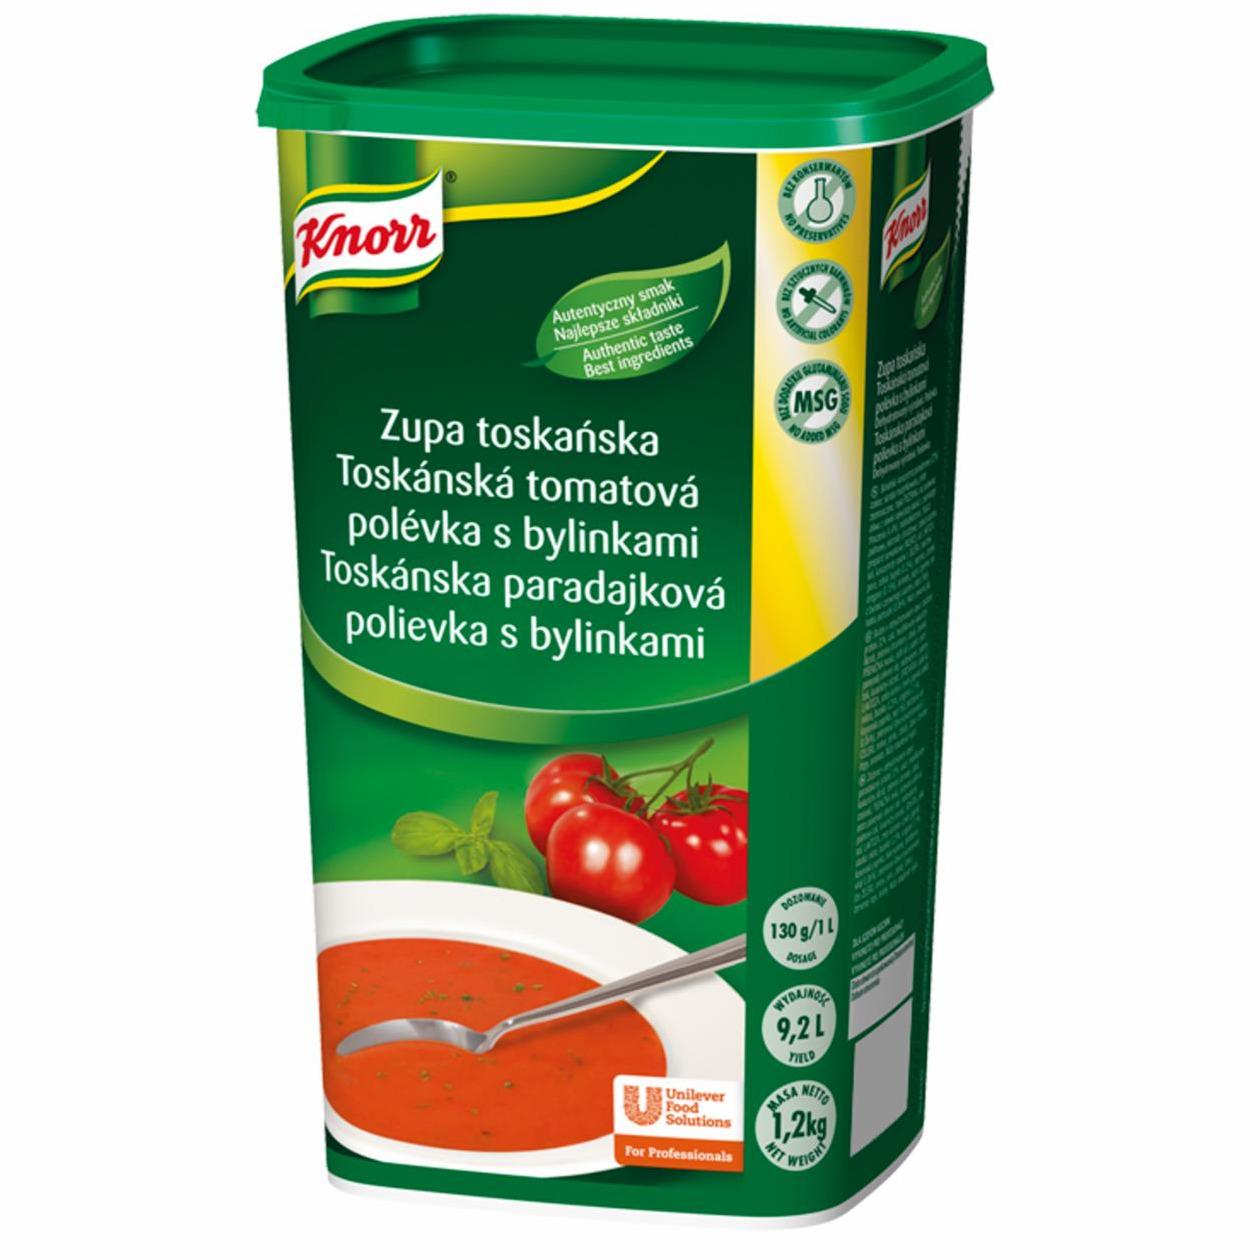 Zdjęcia - Knorr Zupa toskańska 1,2 kg